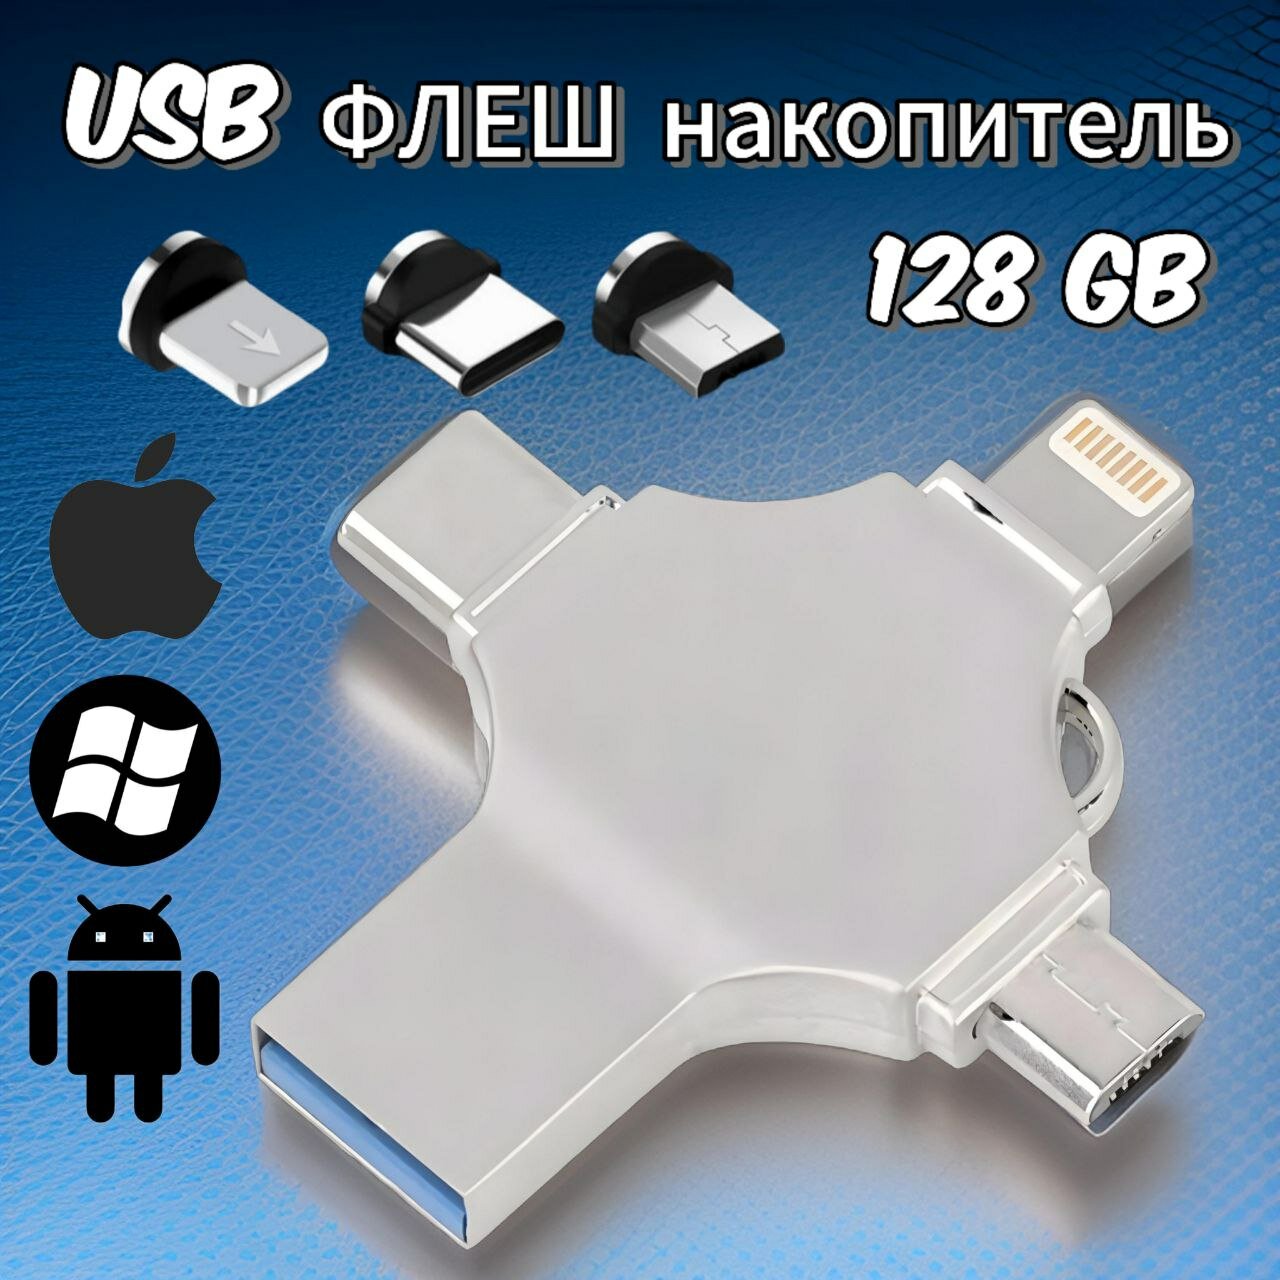 Металлическая флешка для Айфон на 128GB / USB флеш накопитель Flash card Y Disk USB 128 ГБ / 4в1 Lightning, USB, USB Type-C, Micro-USB / цвет серебро